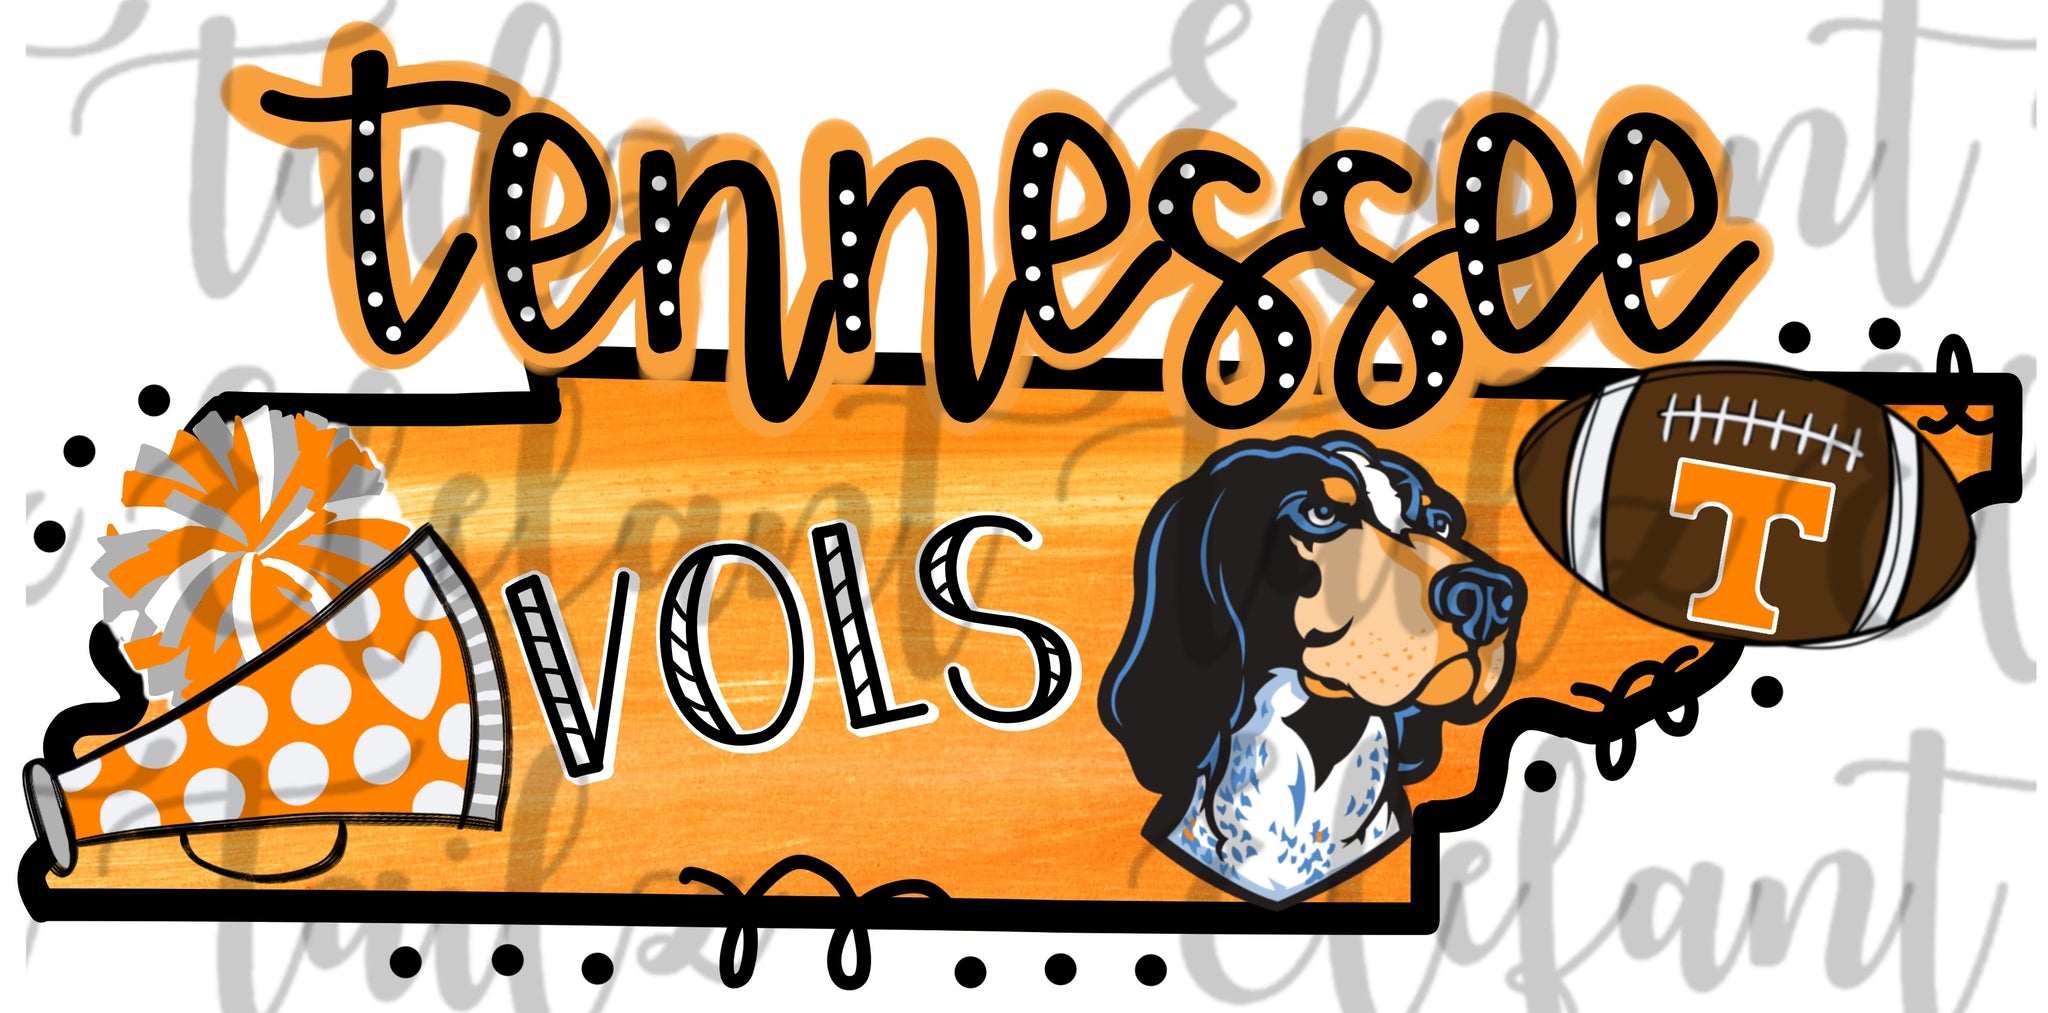 Tennessee Vols State Design